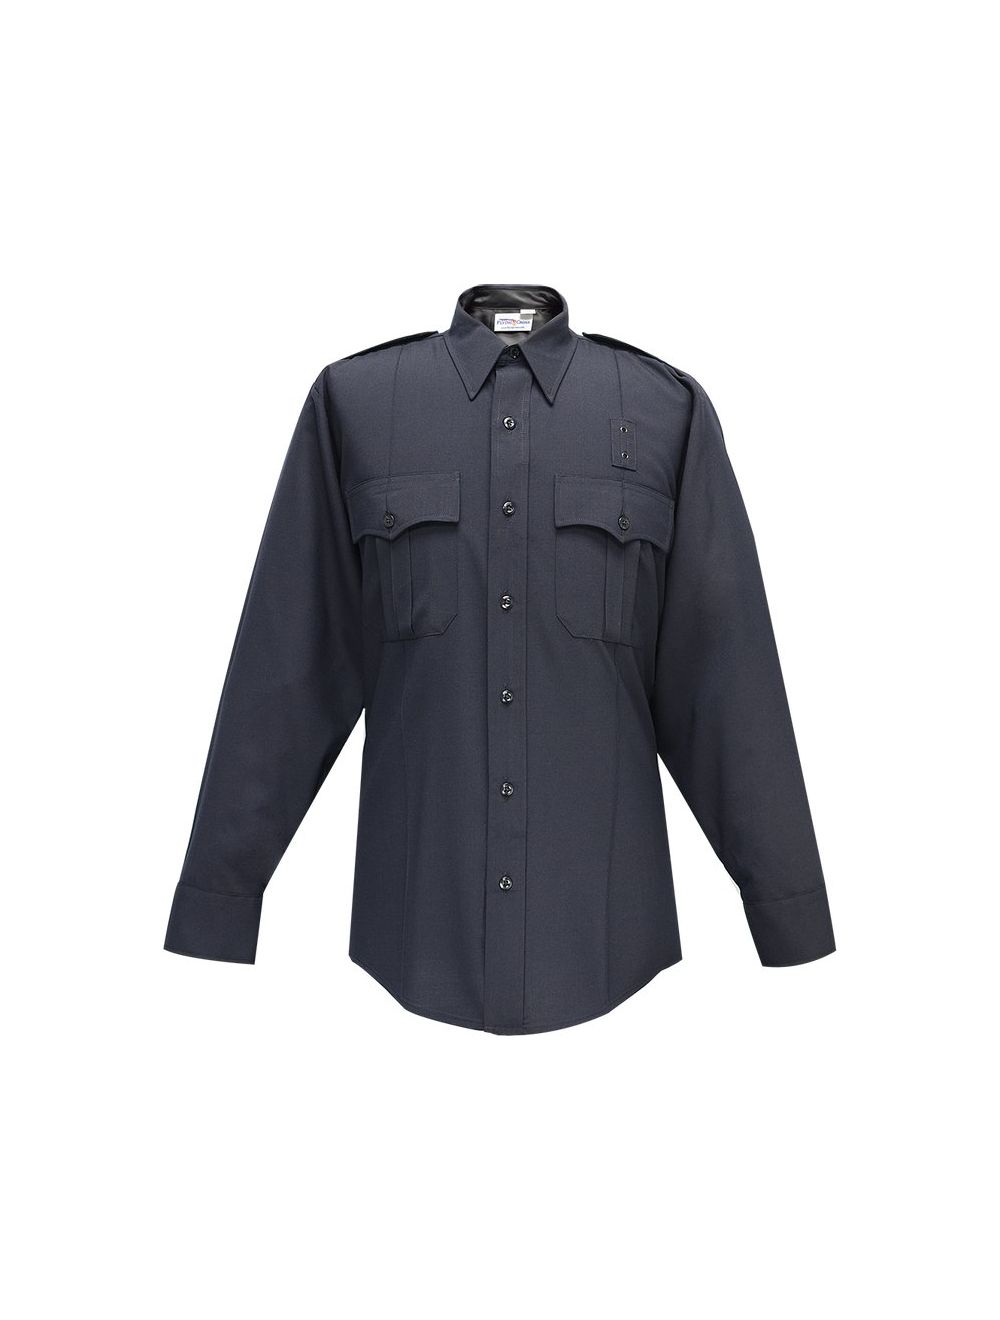 Justice Long Sleeve Shirt w/ Zipper - LAPD Navy